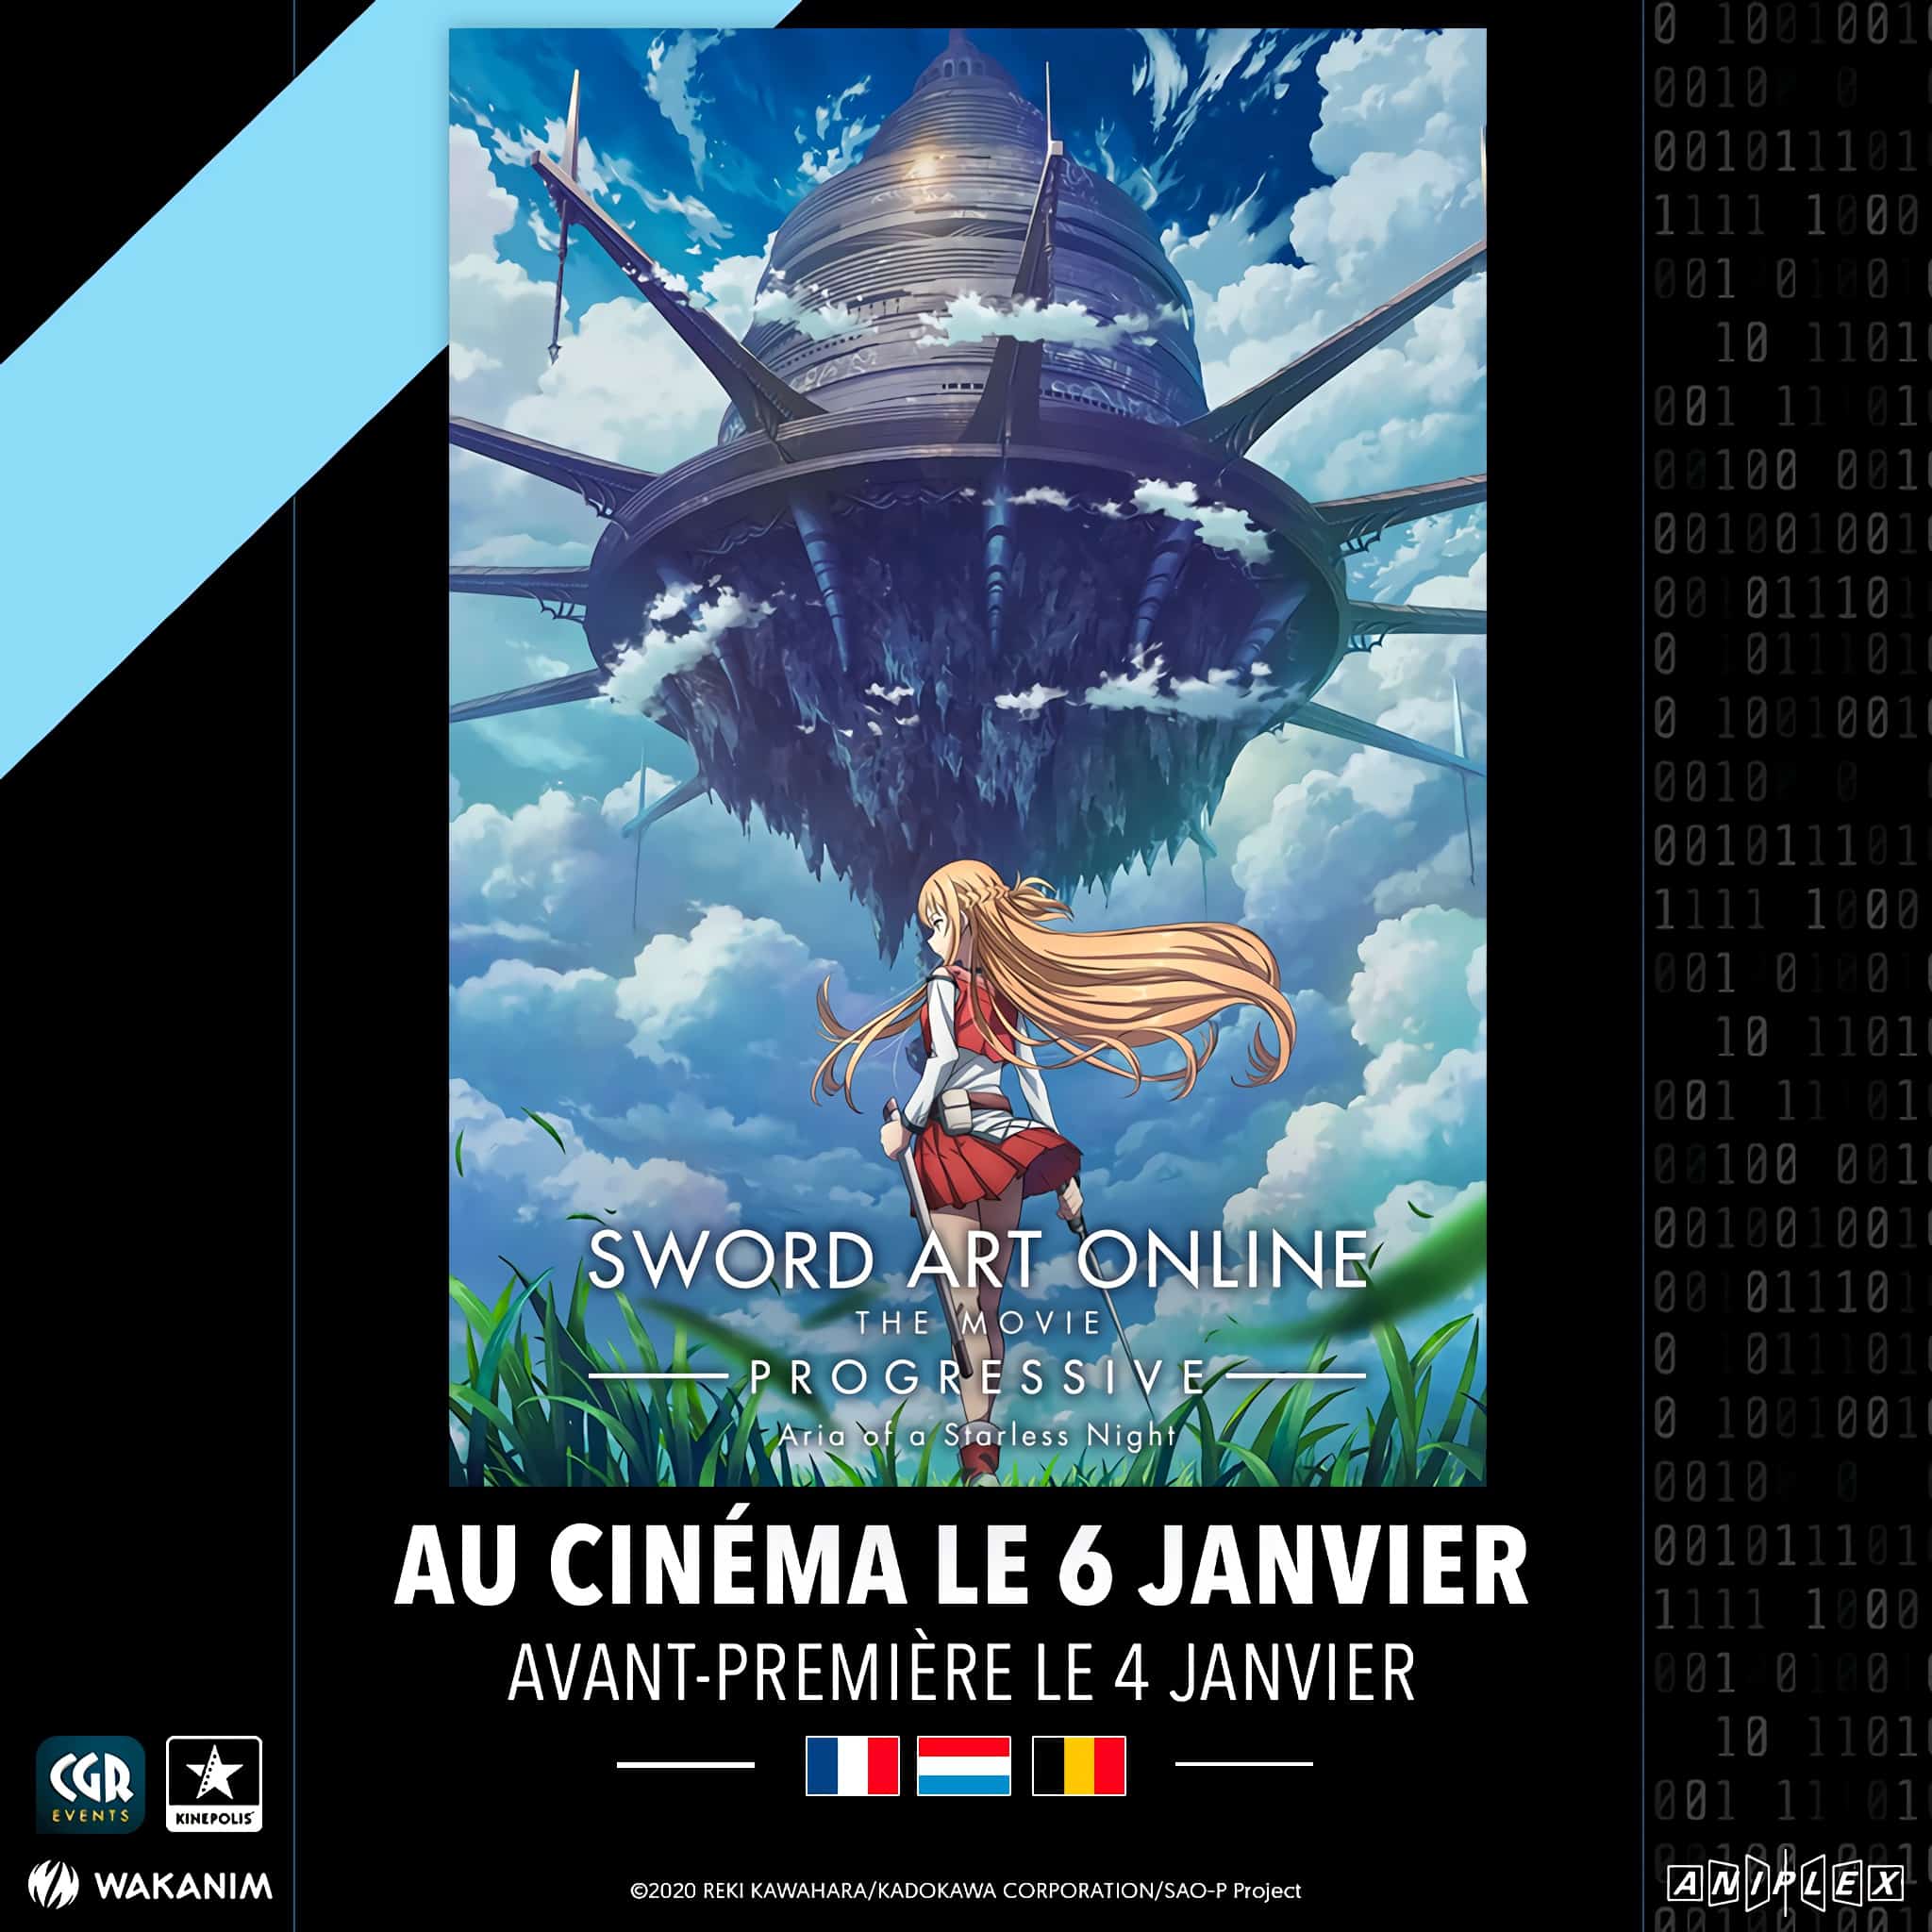 Annonce de la date de sortie du film Sword Art Online : Progressive en France